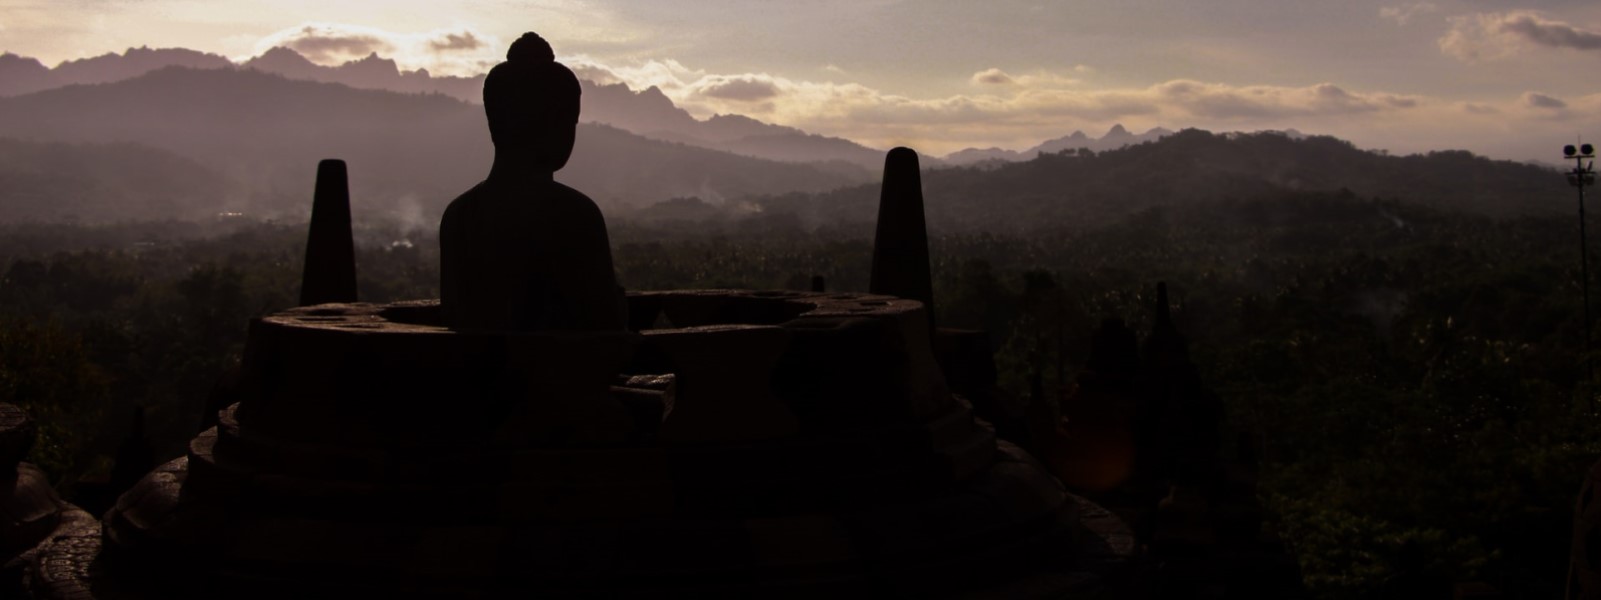 Skyline, Buddha